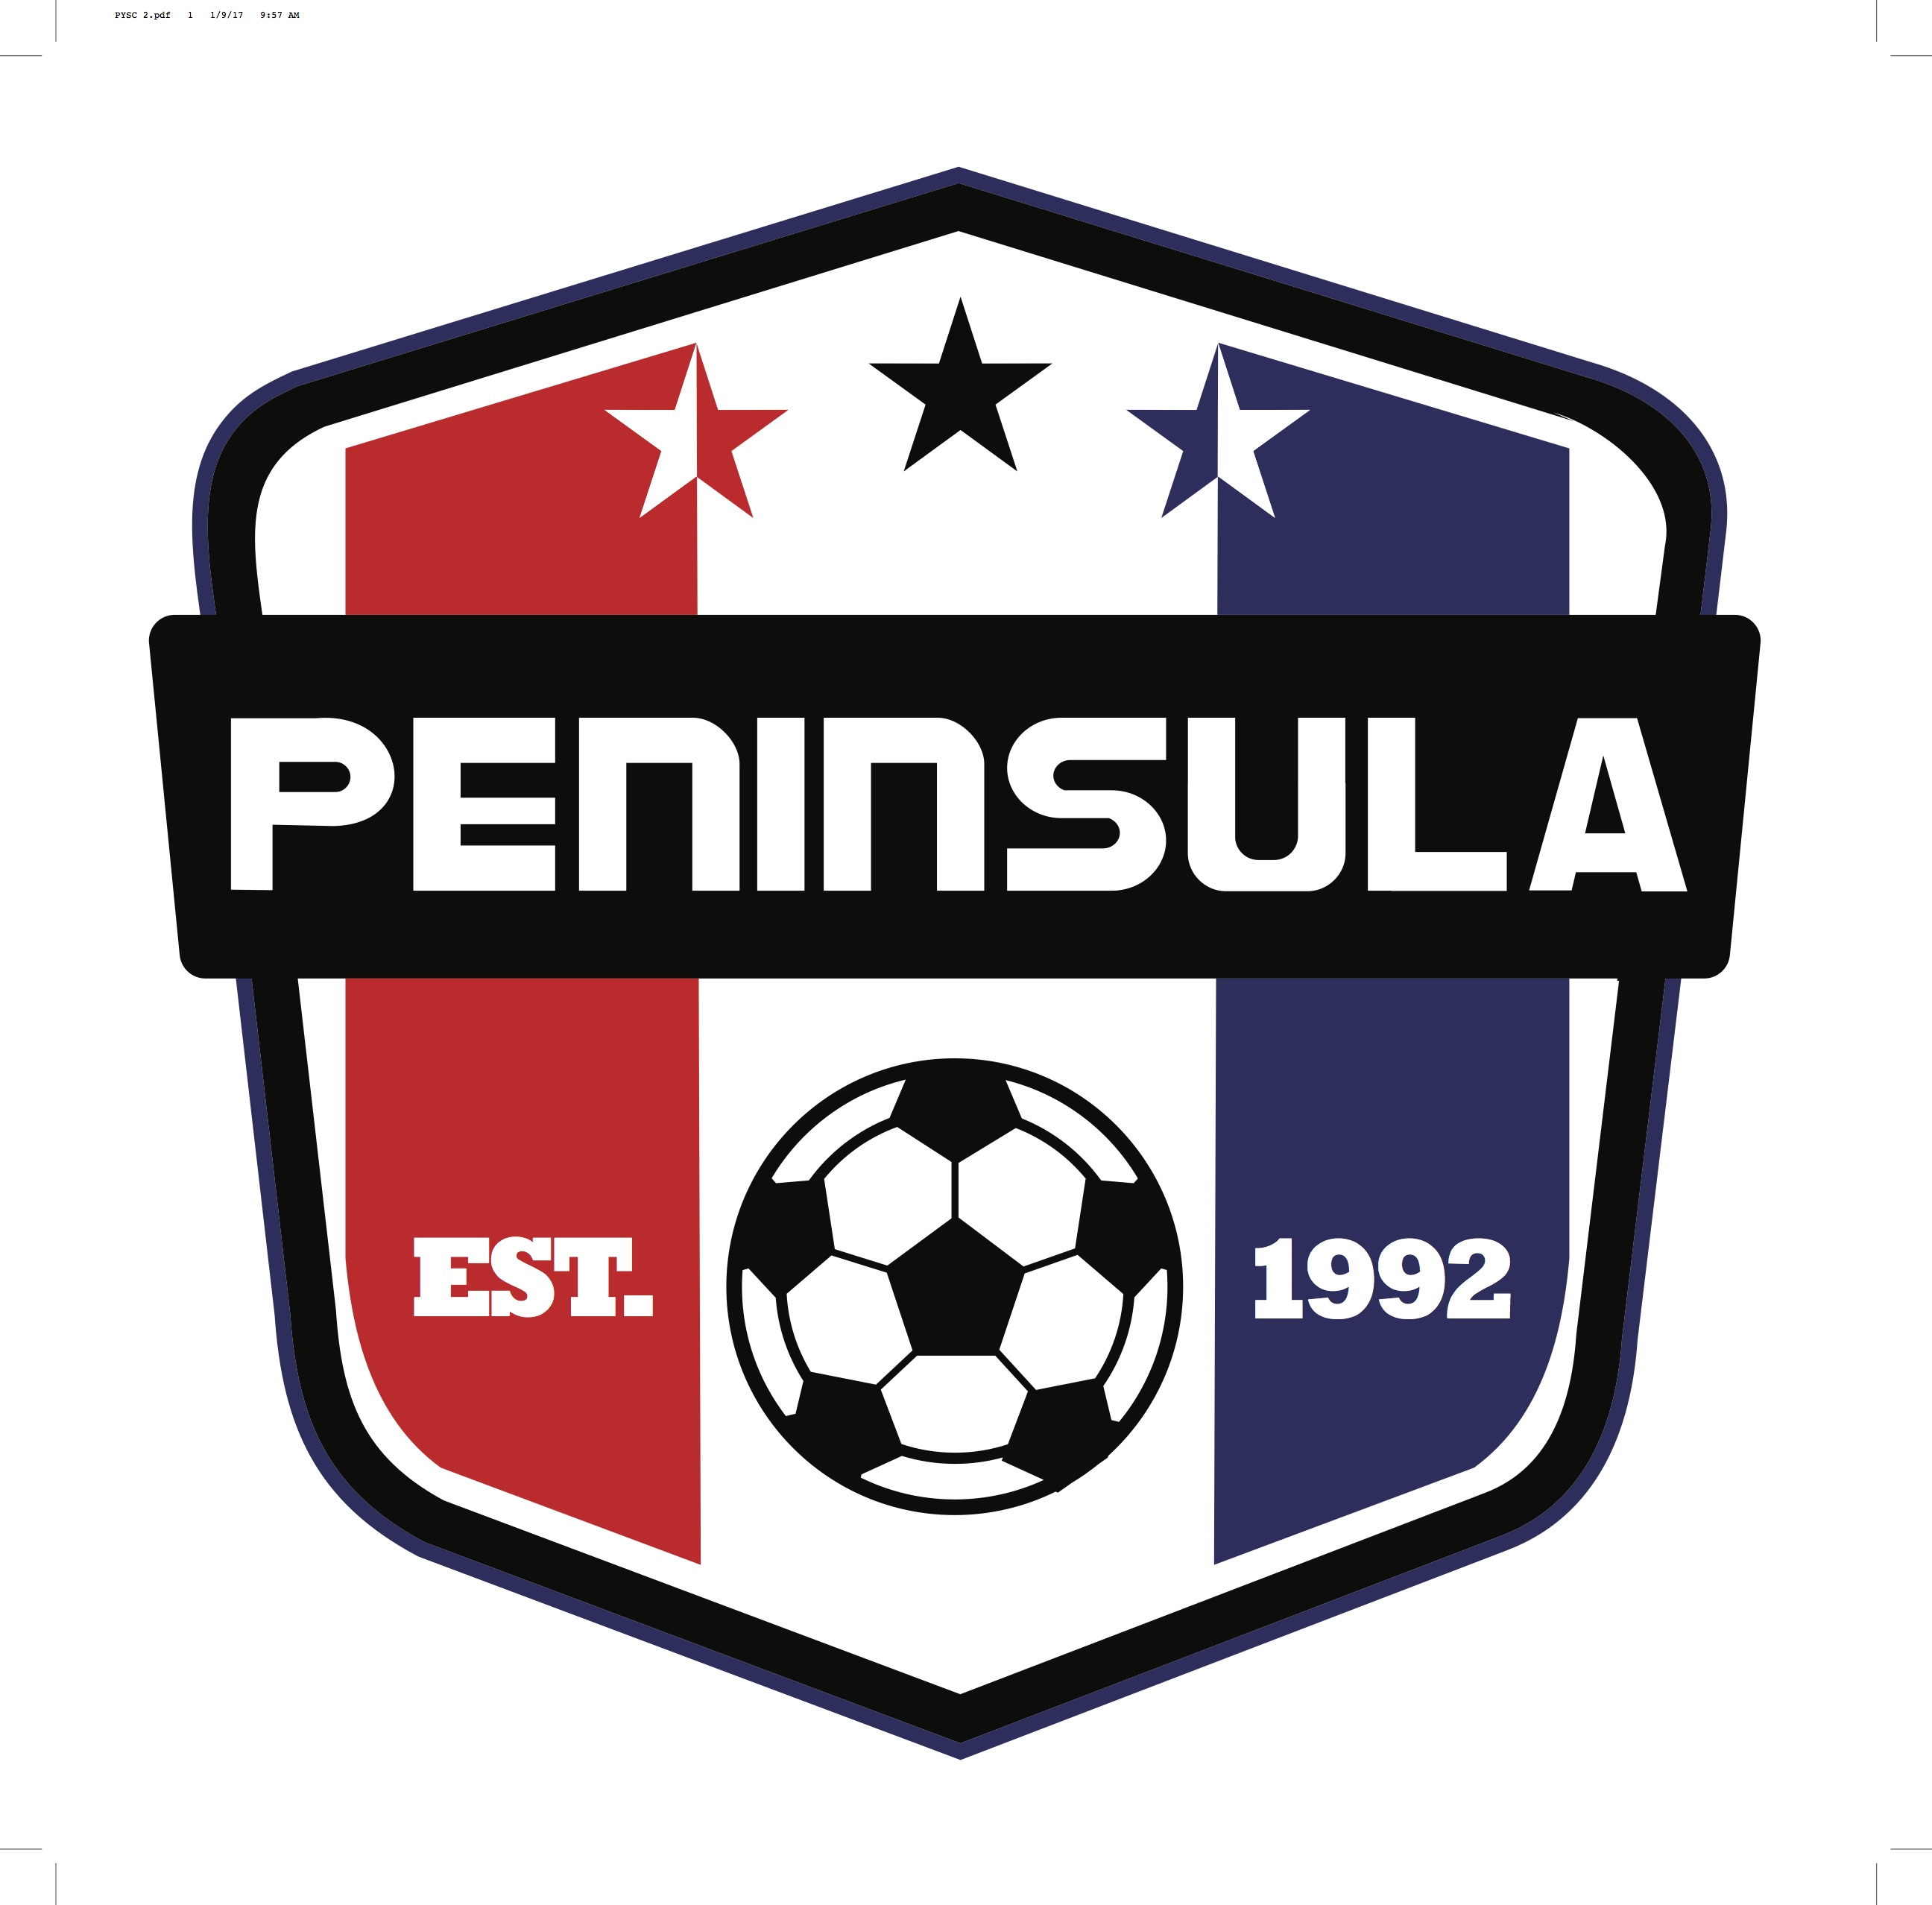 Peninsula SC team badge